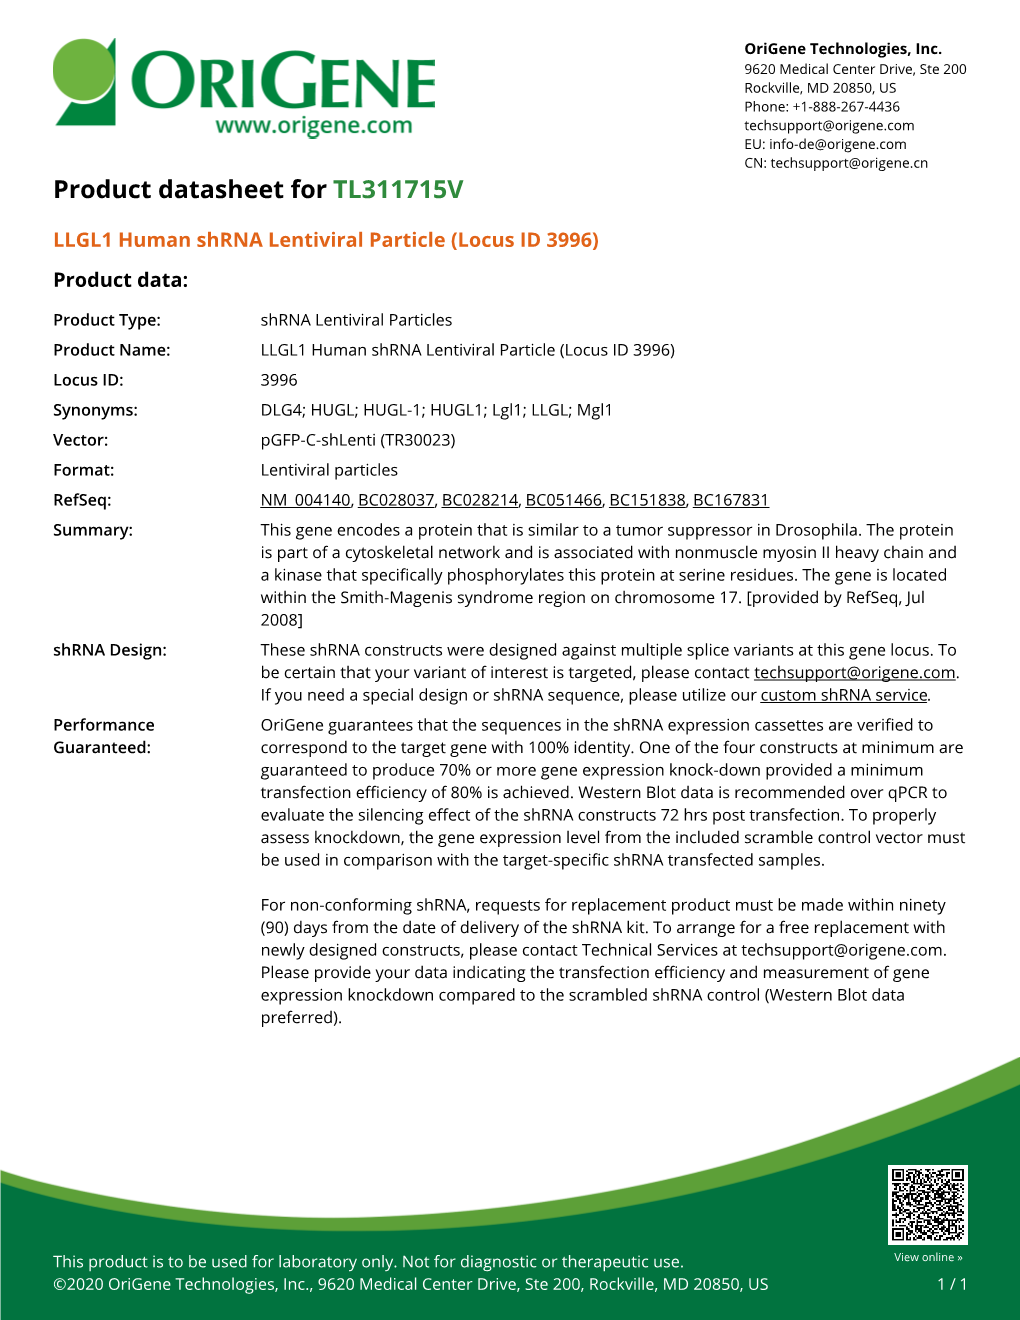 LLGL1 Human Shrna Lentiviral Particle (Locus ID 3996) Product Data